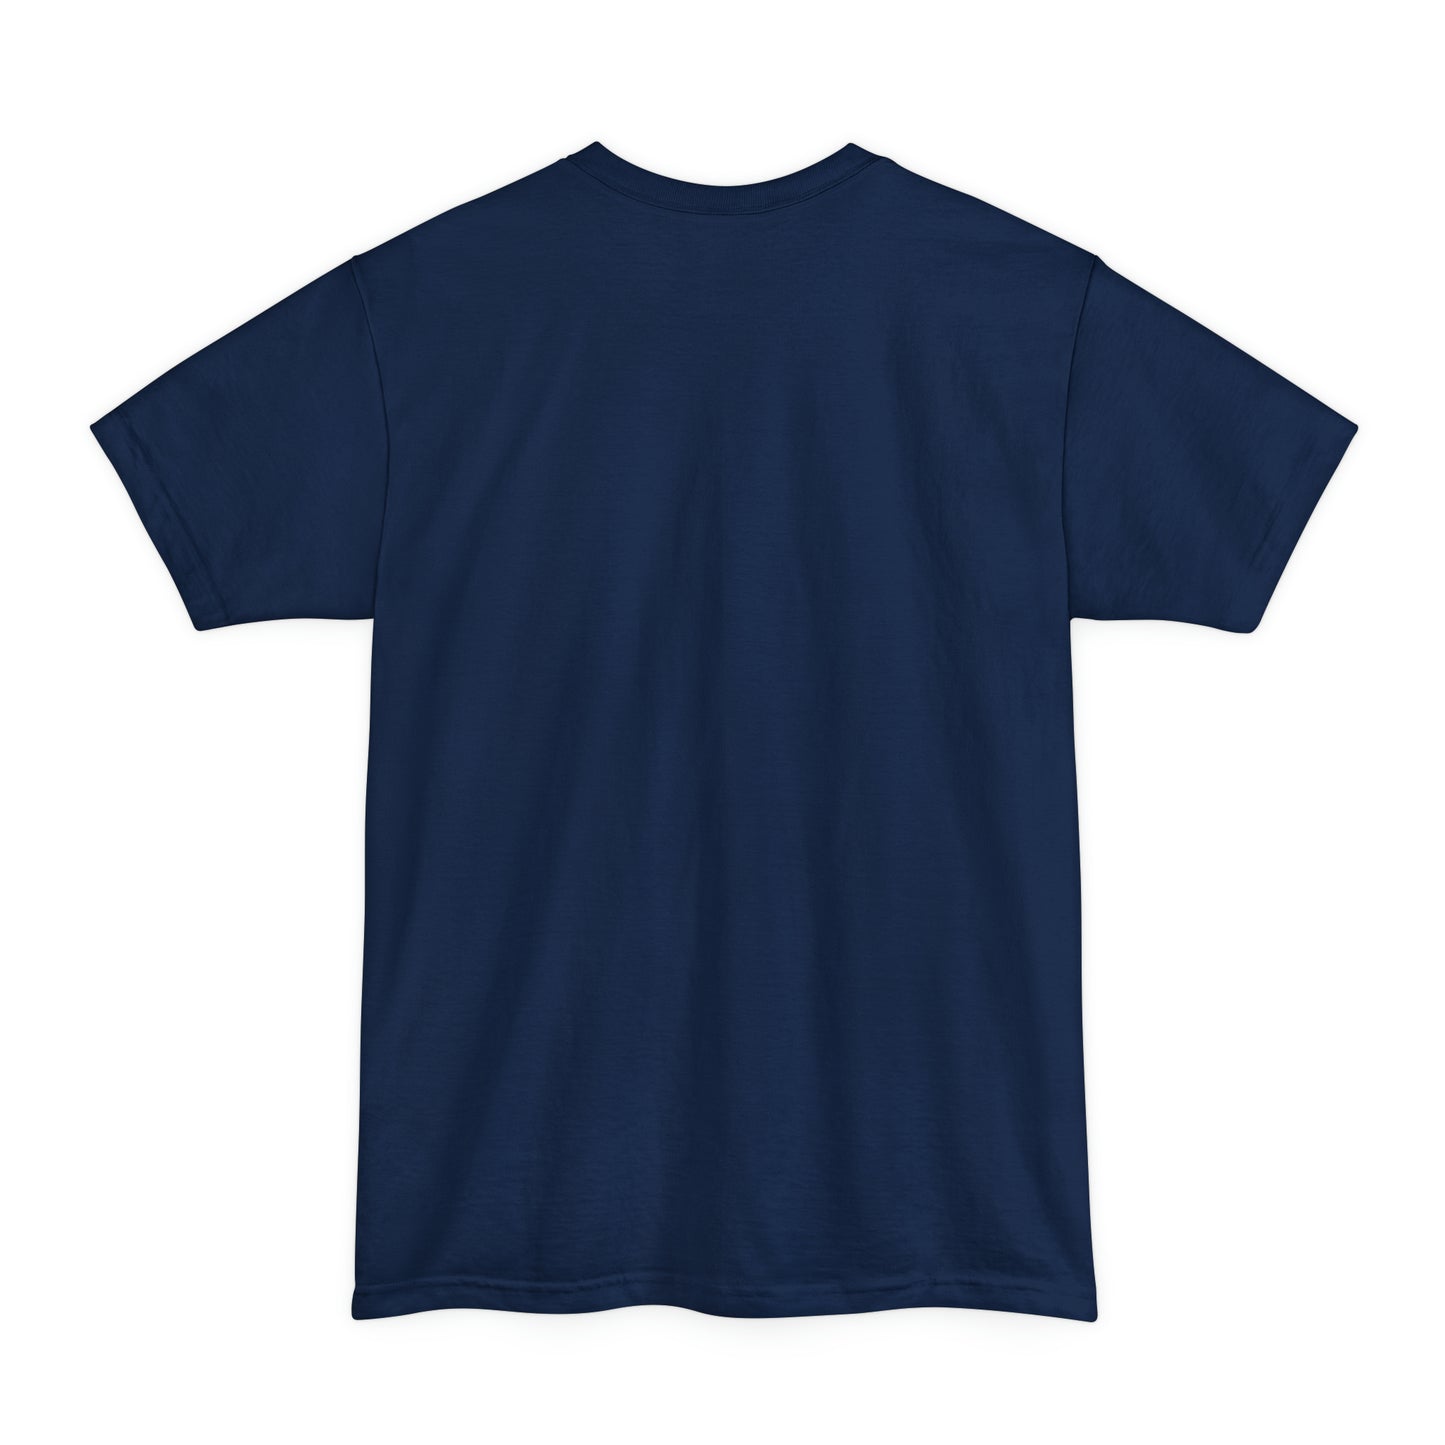 King Of NYC BIG & TALL Unisex Tall Beefy-T® T-Shirt